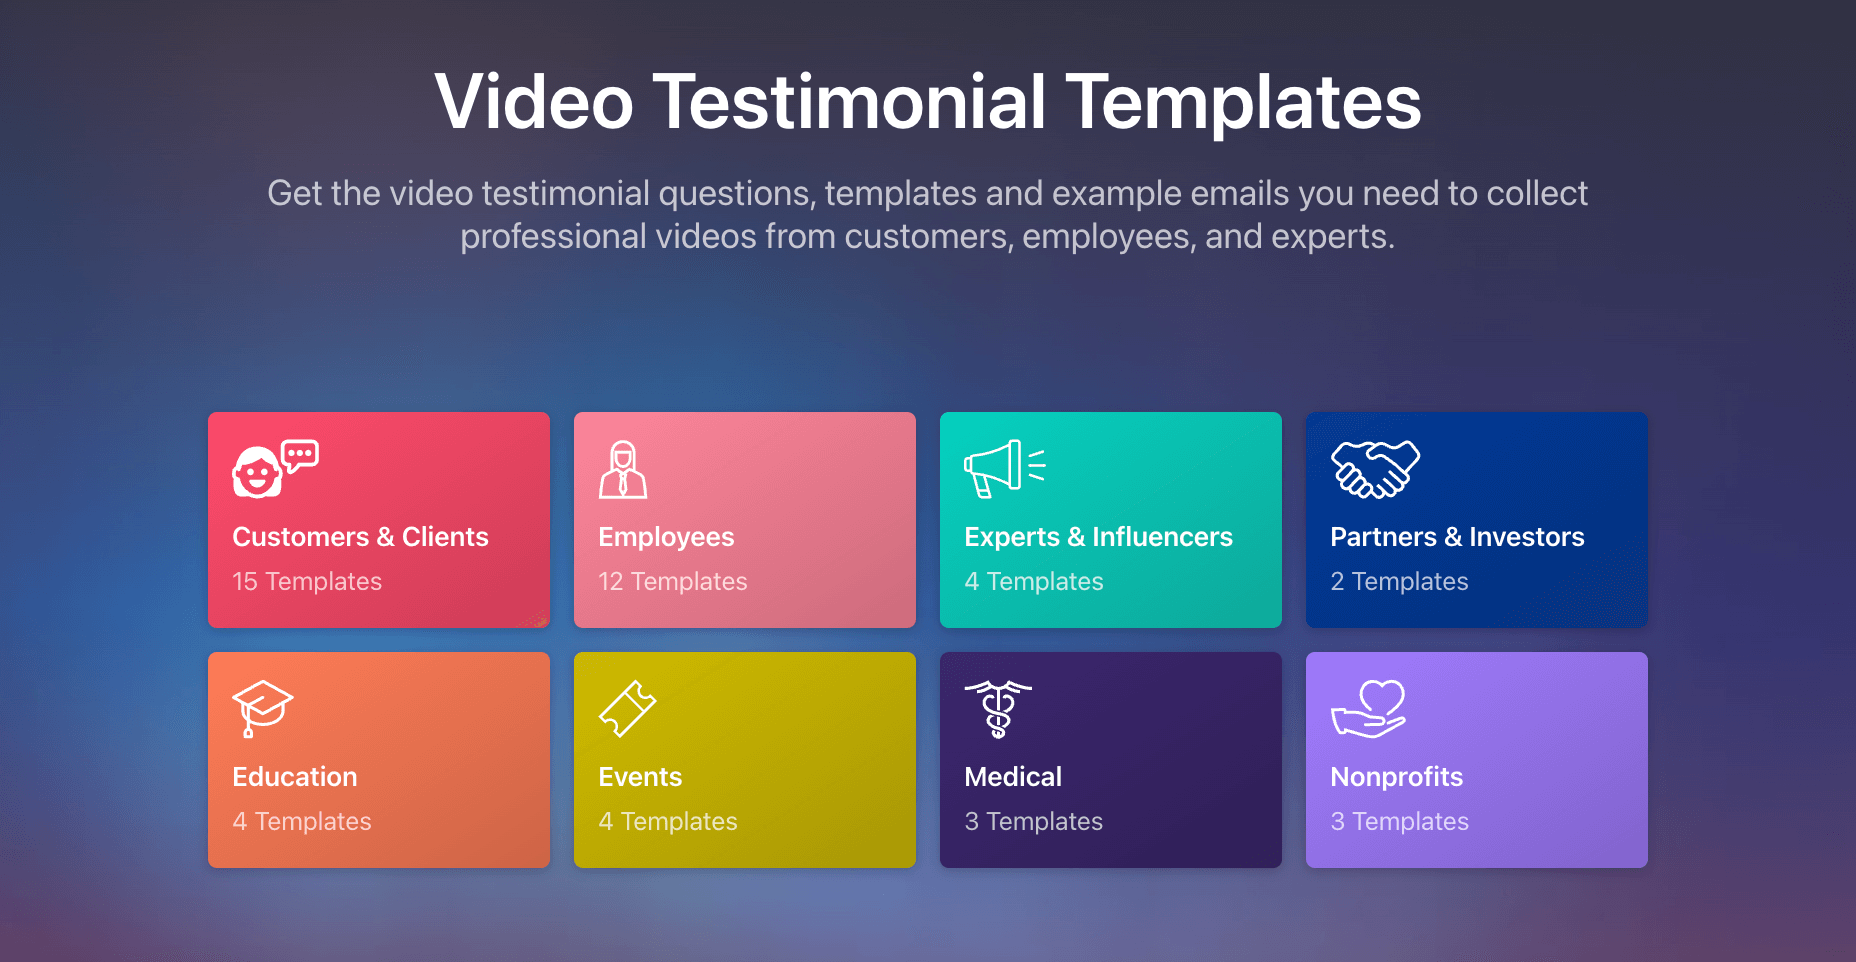 Video testimonial templates page. 